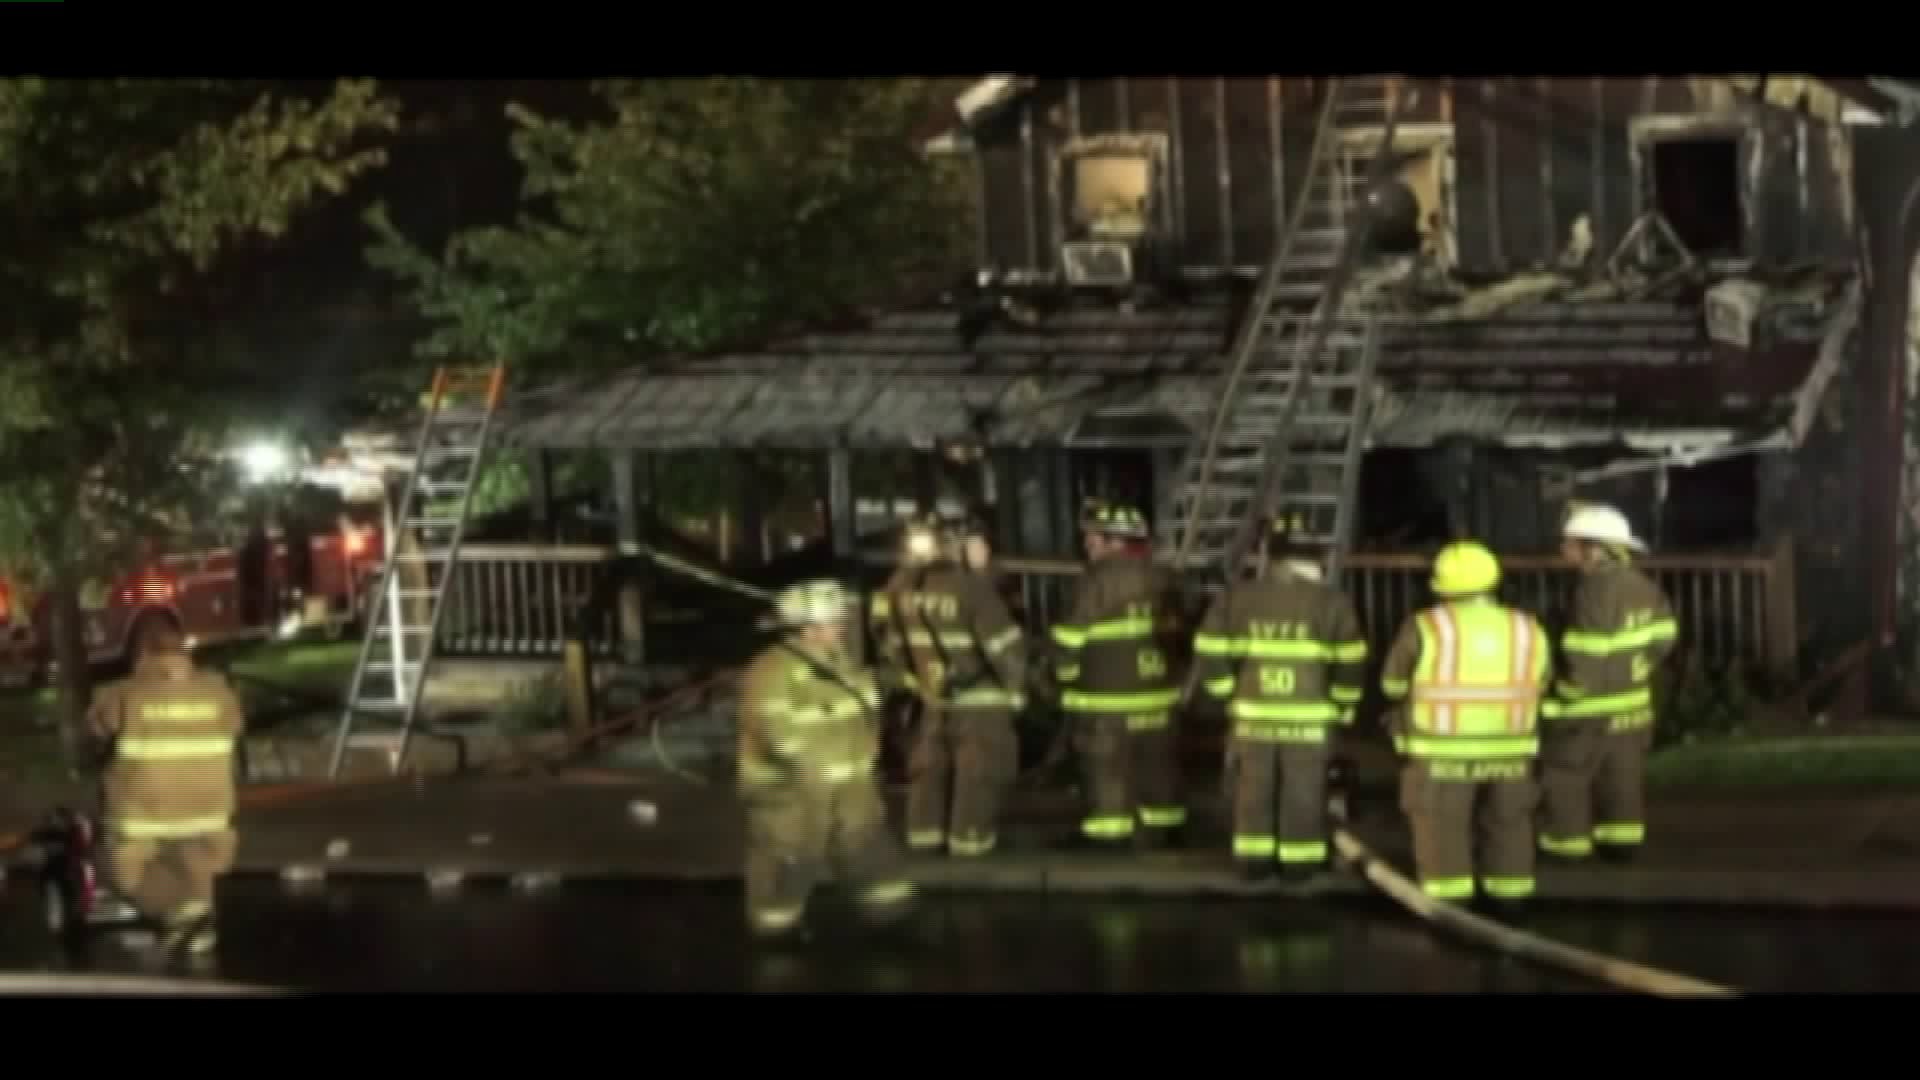 Pregnant Woman, 2 Children Dead After Fire